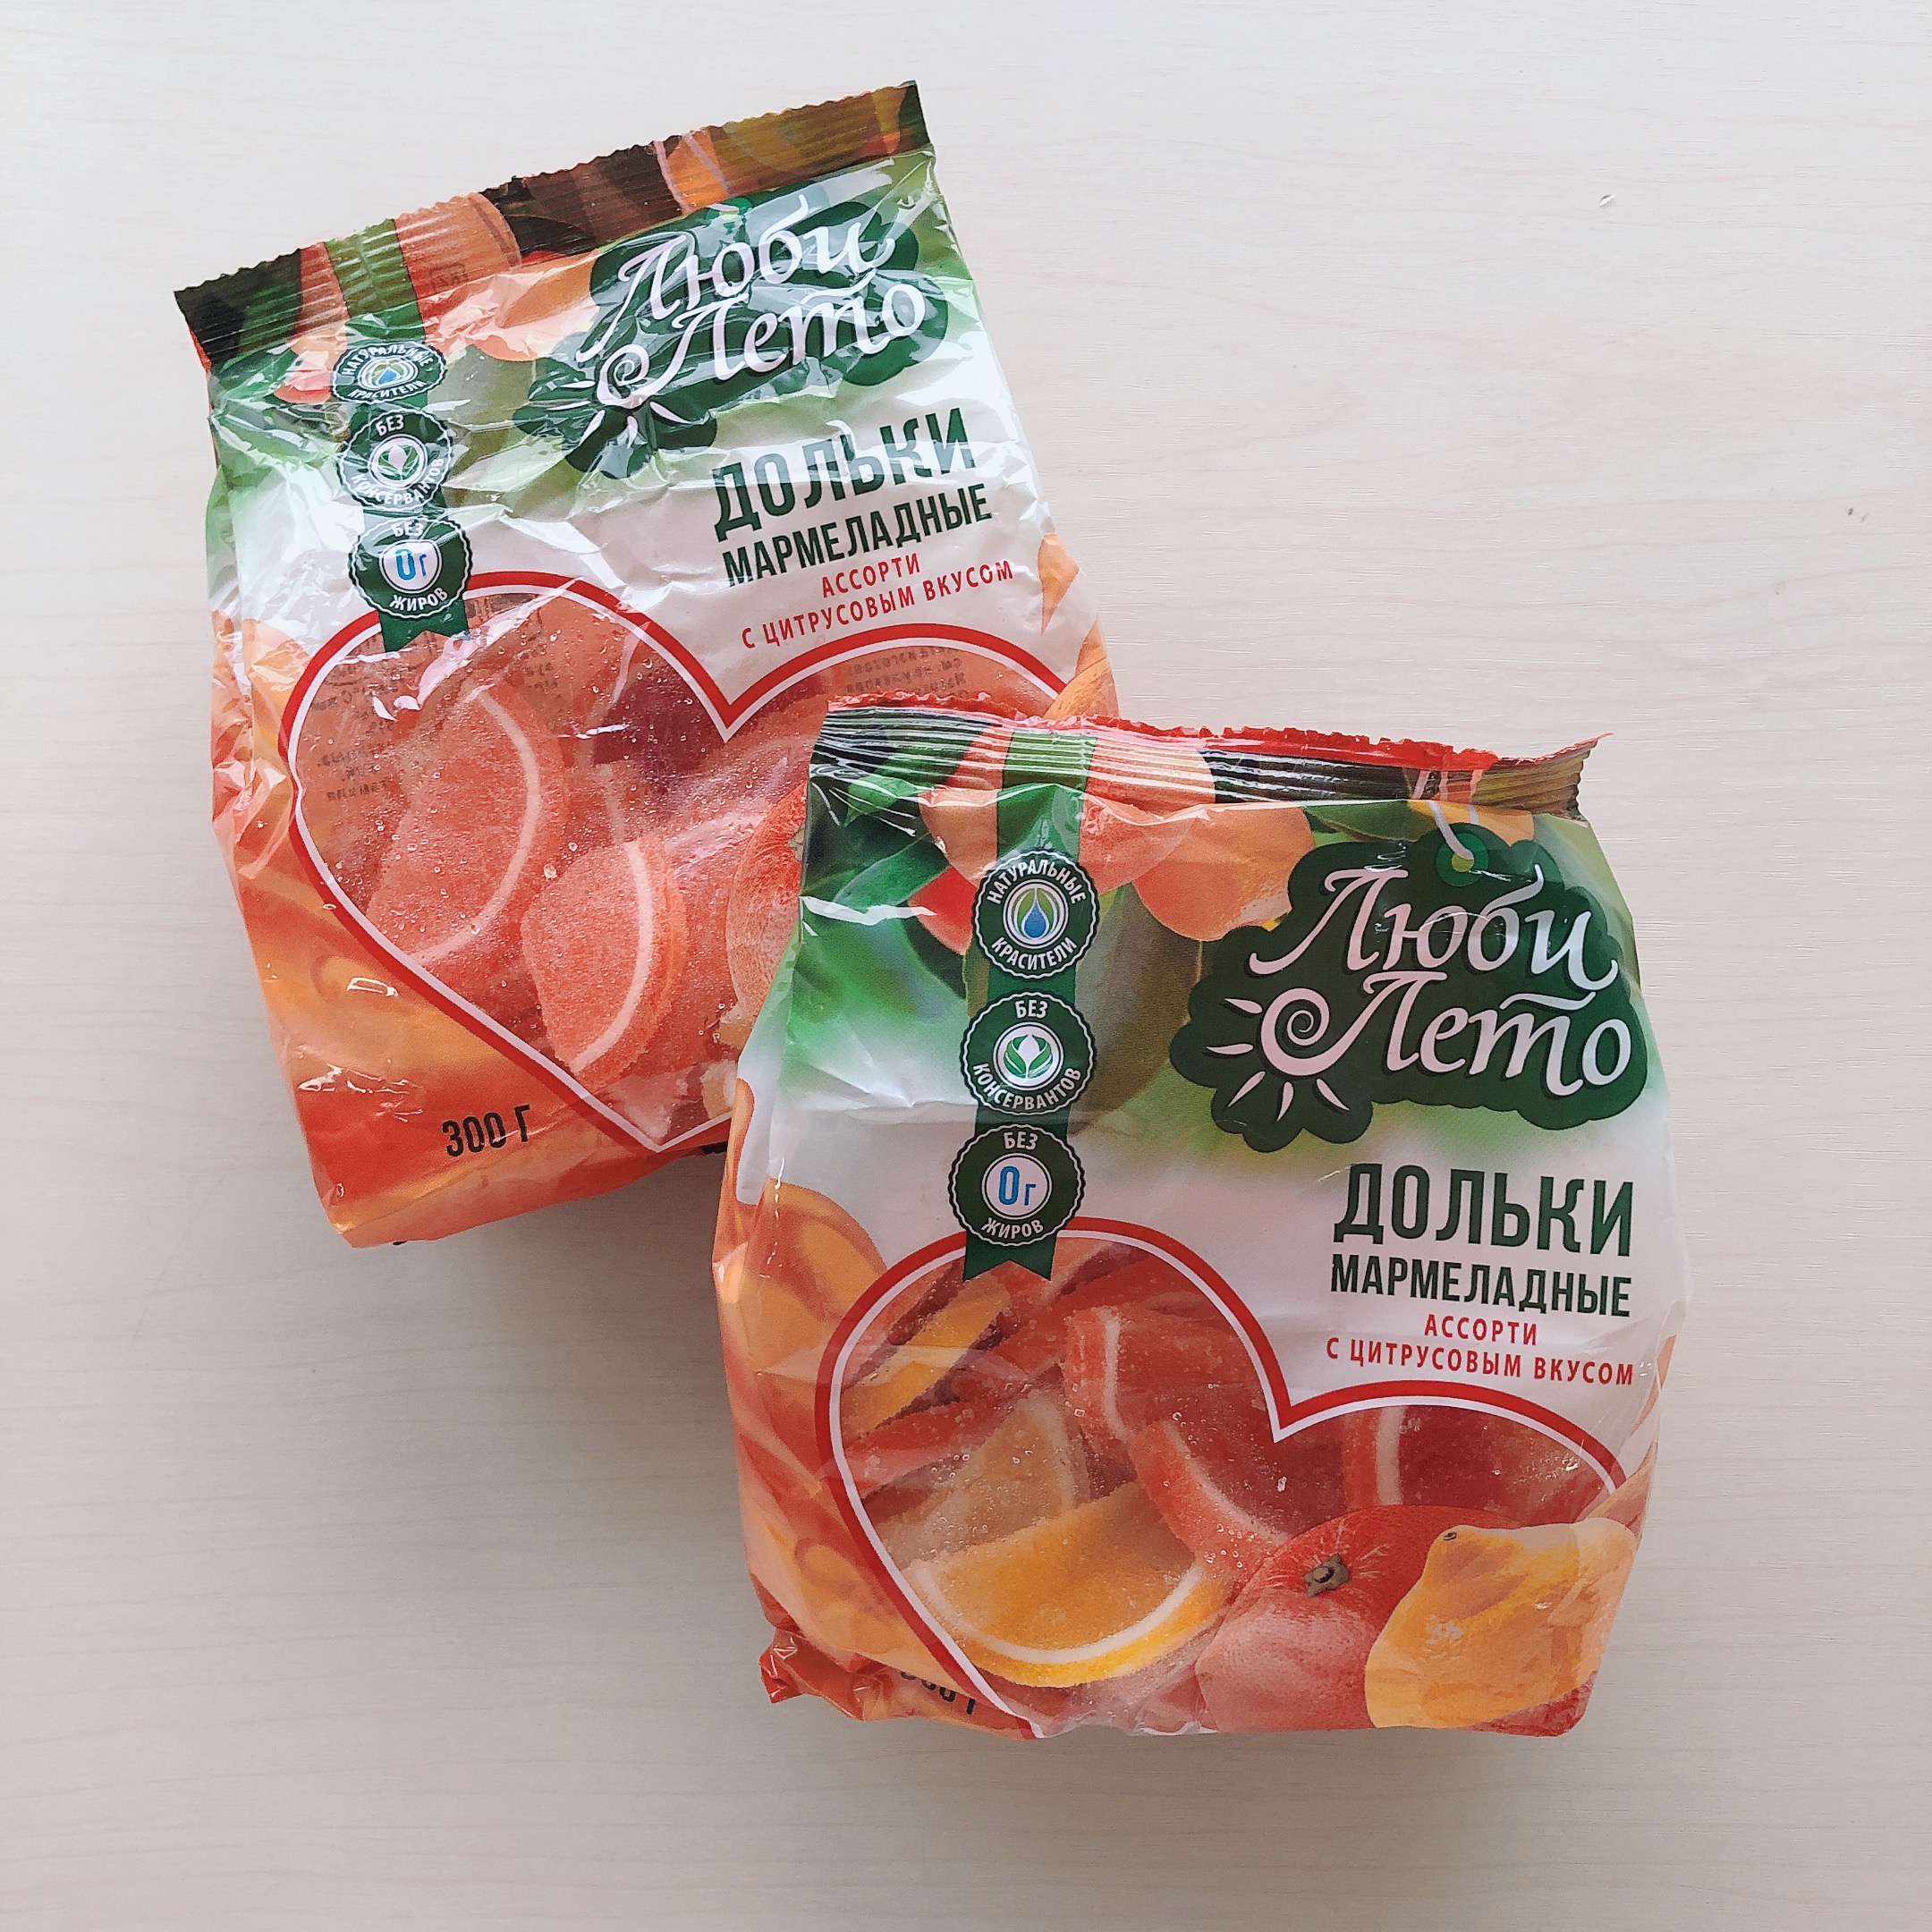 Supplying Russian mixed-flavored fudge